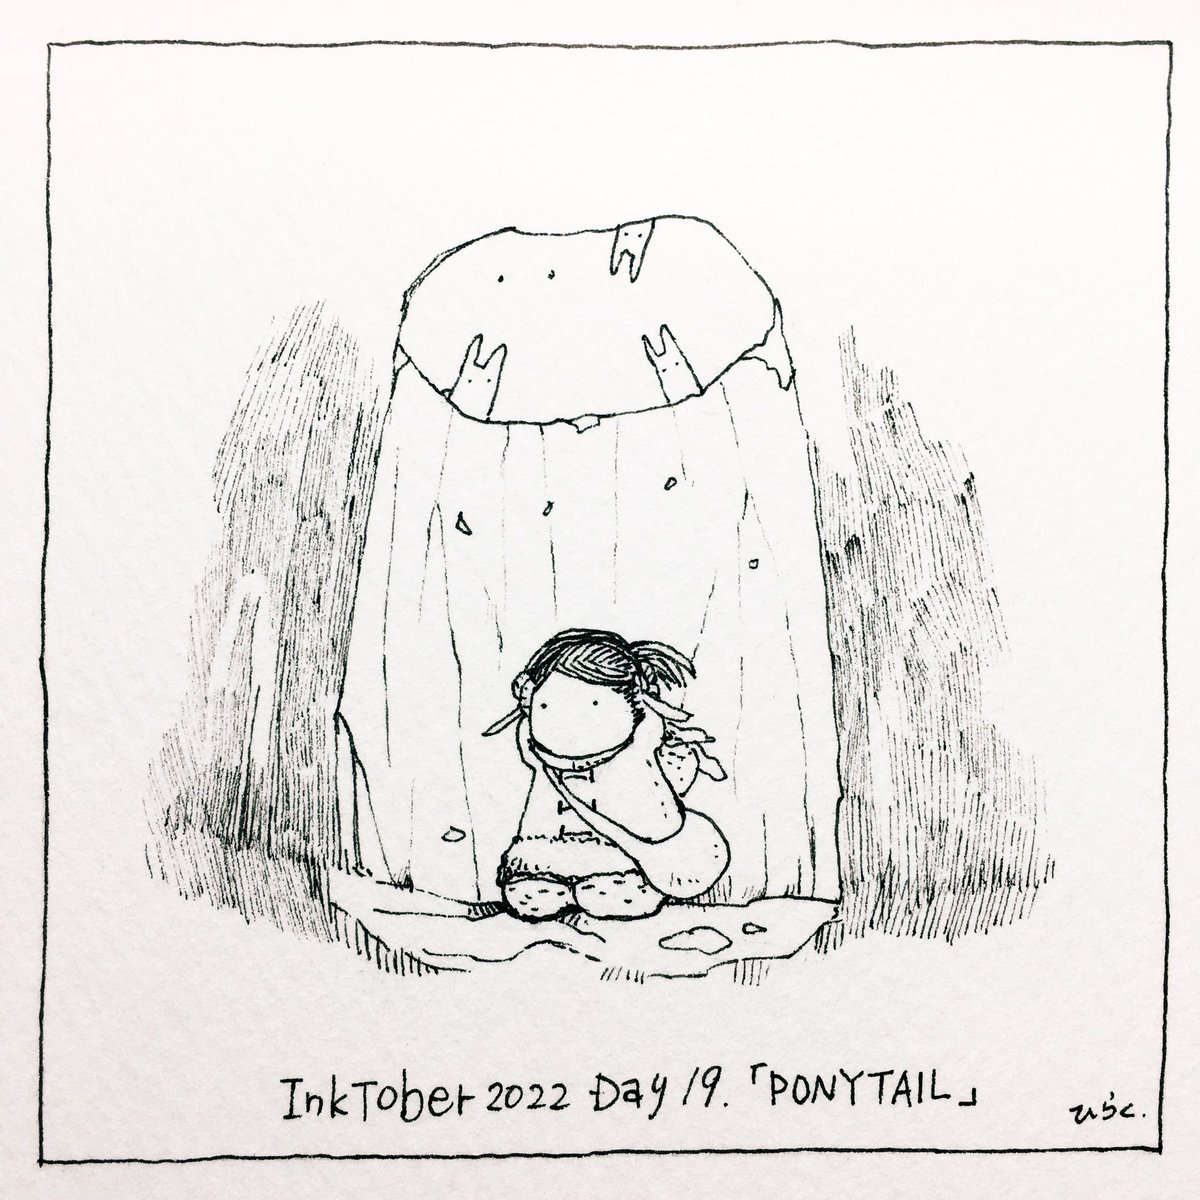 10/19: PONYTAIL
明日は脱出したい。
I want to escape tomorrow.

 #inktober2022 #inktober2022day19  #Pavot  #ペン画 
(明日のお題は「BLUFF」)
(Tomorrow's theme is "BLUFF") 